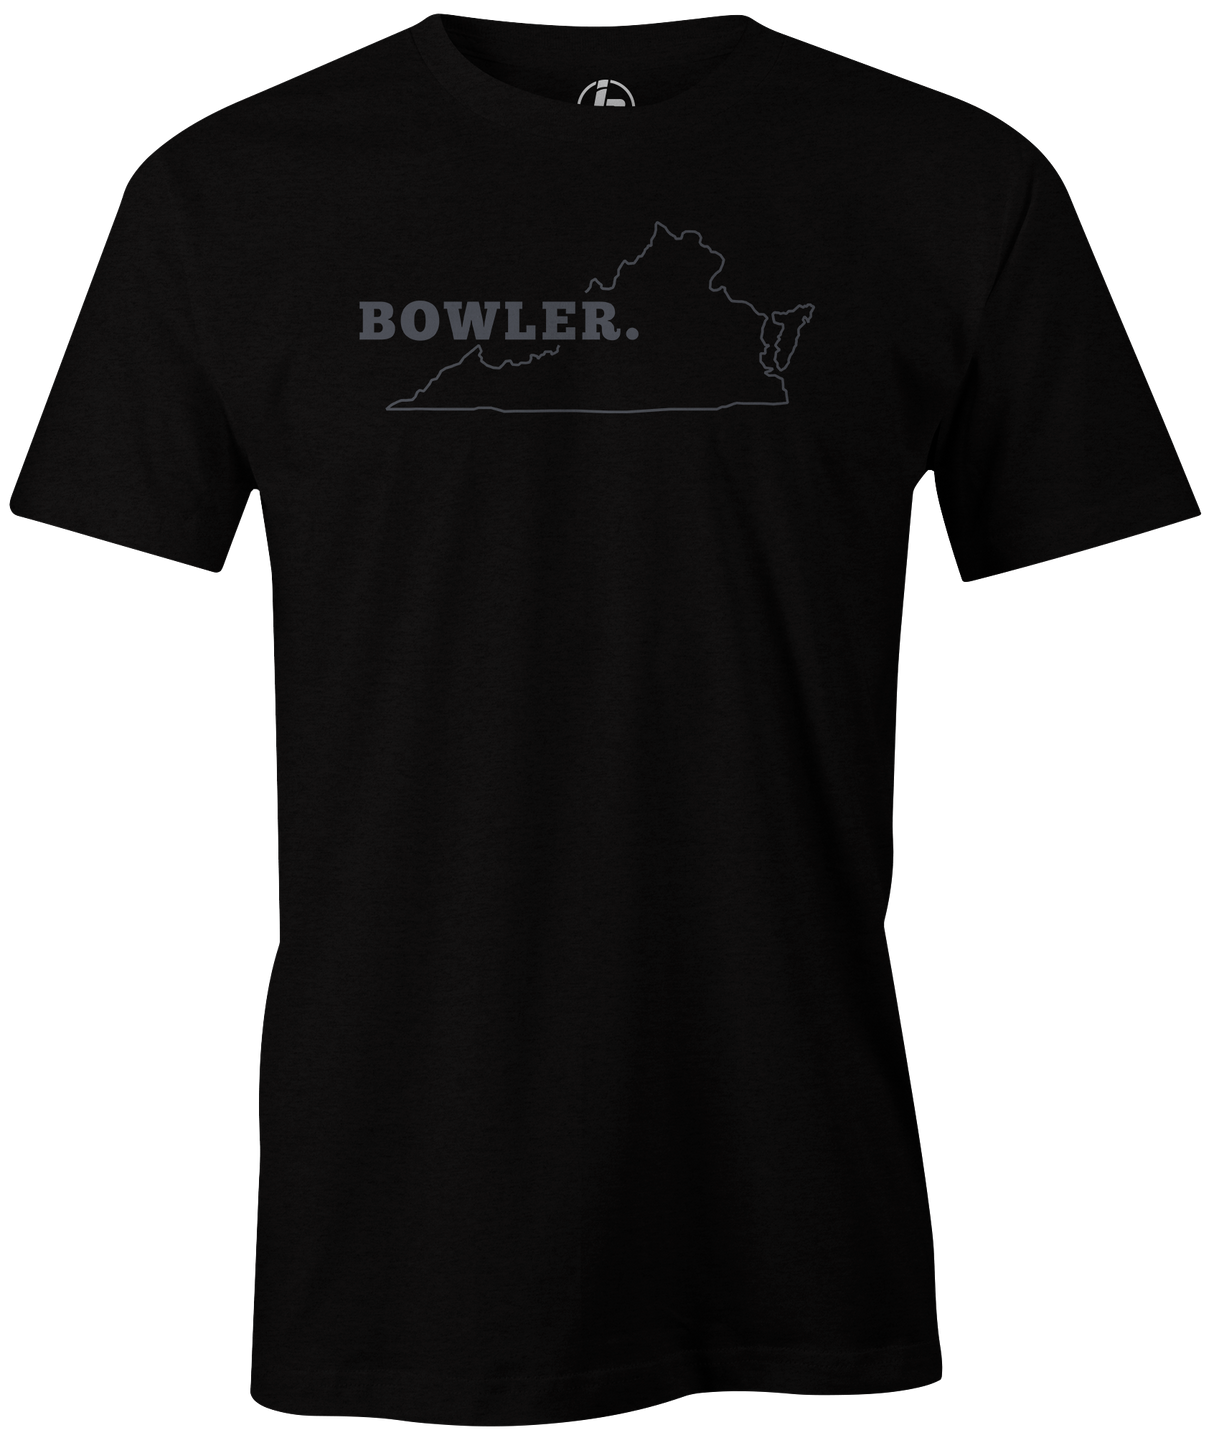 Virginia Men's State Bowling T-shirt, Black, Cool, novelty, tshirt, tee, tee-shirt, tee shirt, teeshirt, team, comfortable